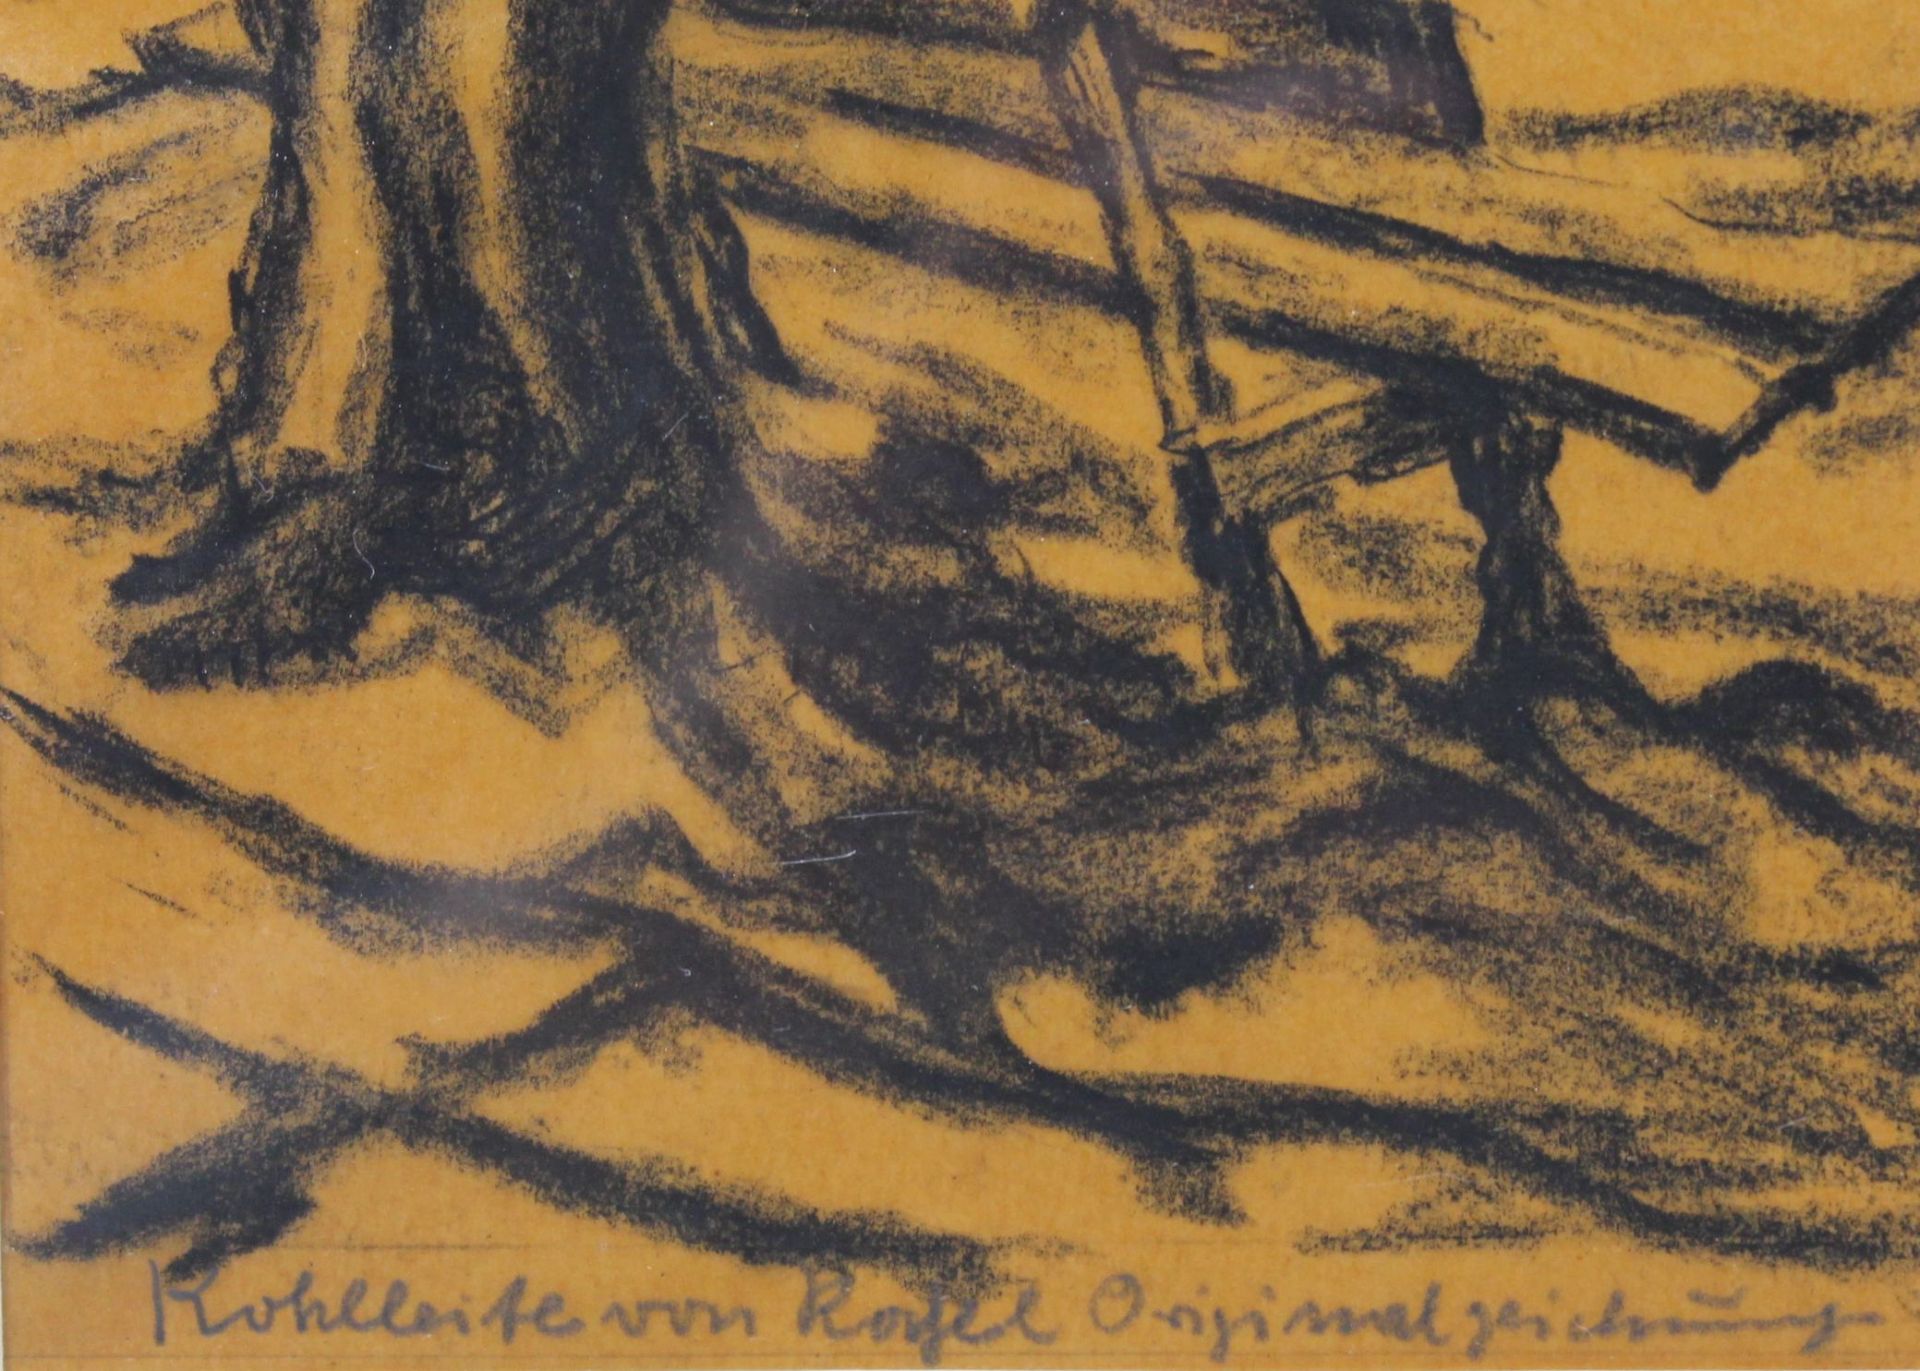 1 Original-Zeichung "Landschaft", rechts unten signiert und datiert Dinkel 1932, ca. 24,5cm x - Image 3 of 3